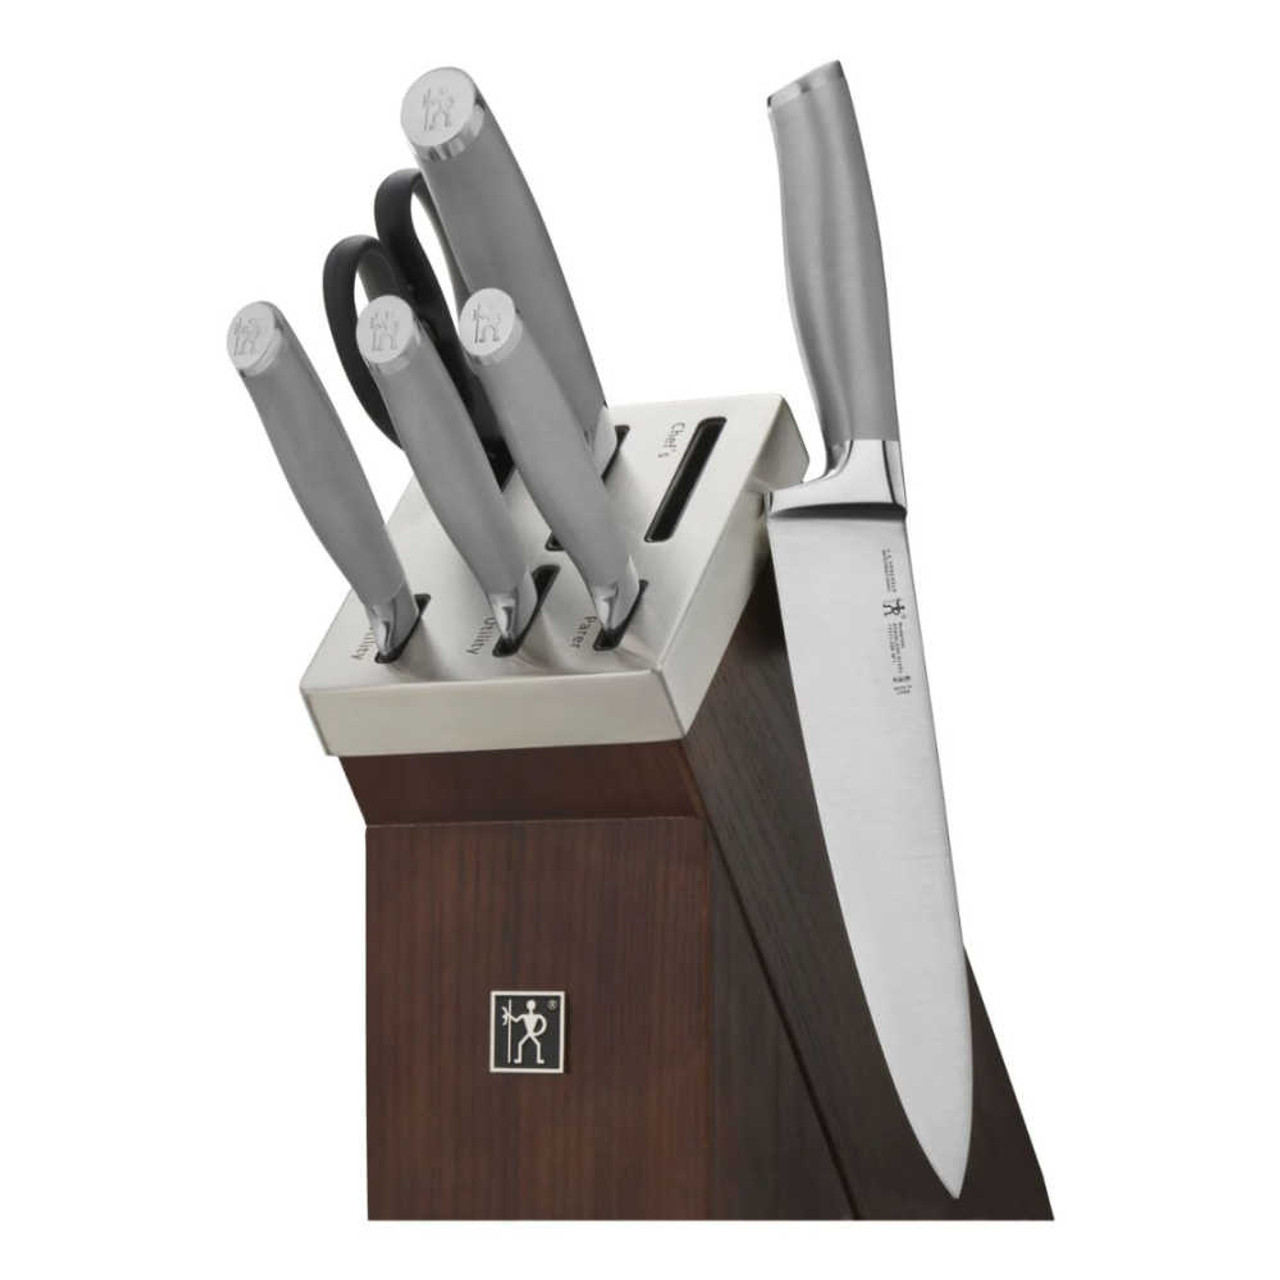 Henckels Modernist 7-Piece Self-Sharpening Knife Block Set